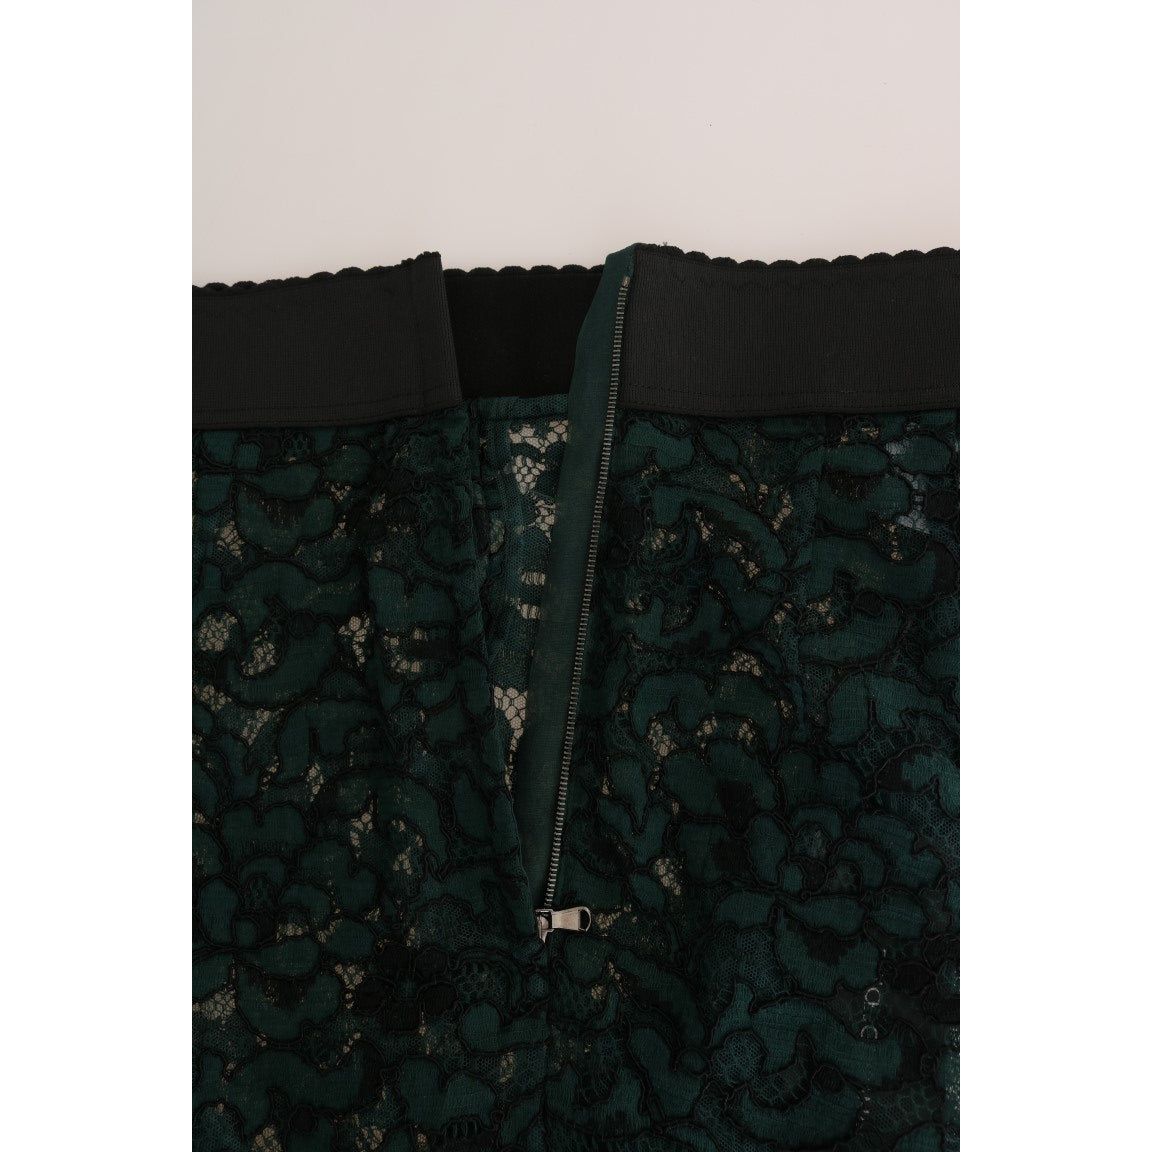 Dolce & Gabbana High Waist Floral Lace Slim Trousers green-floral-lace-leggings-pants